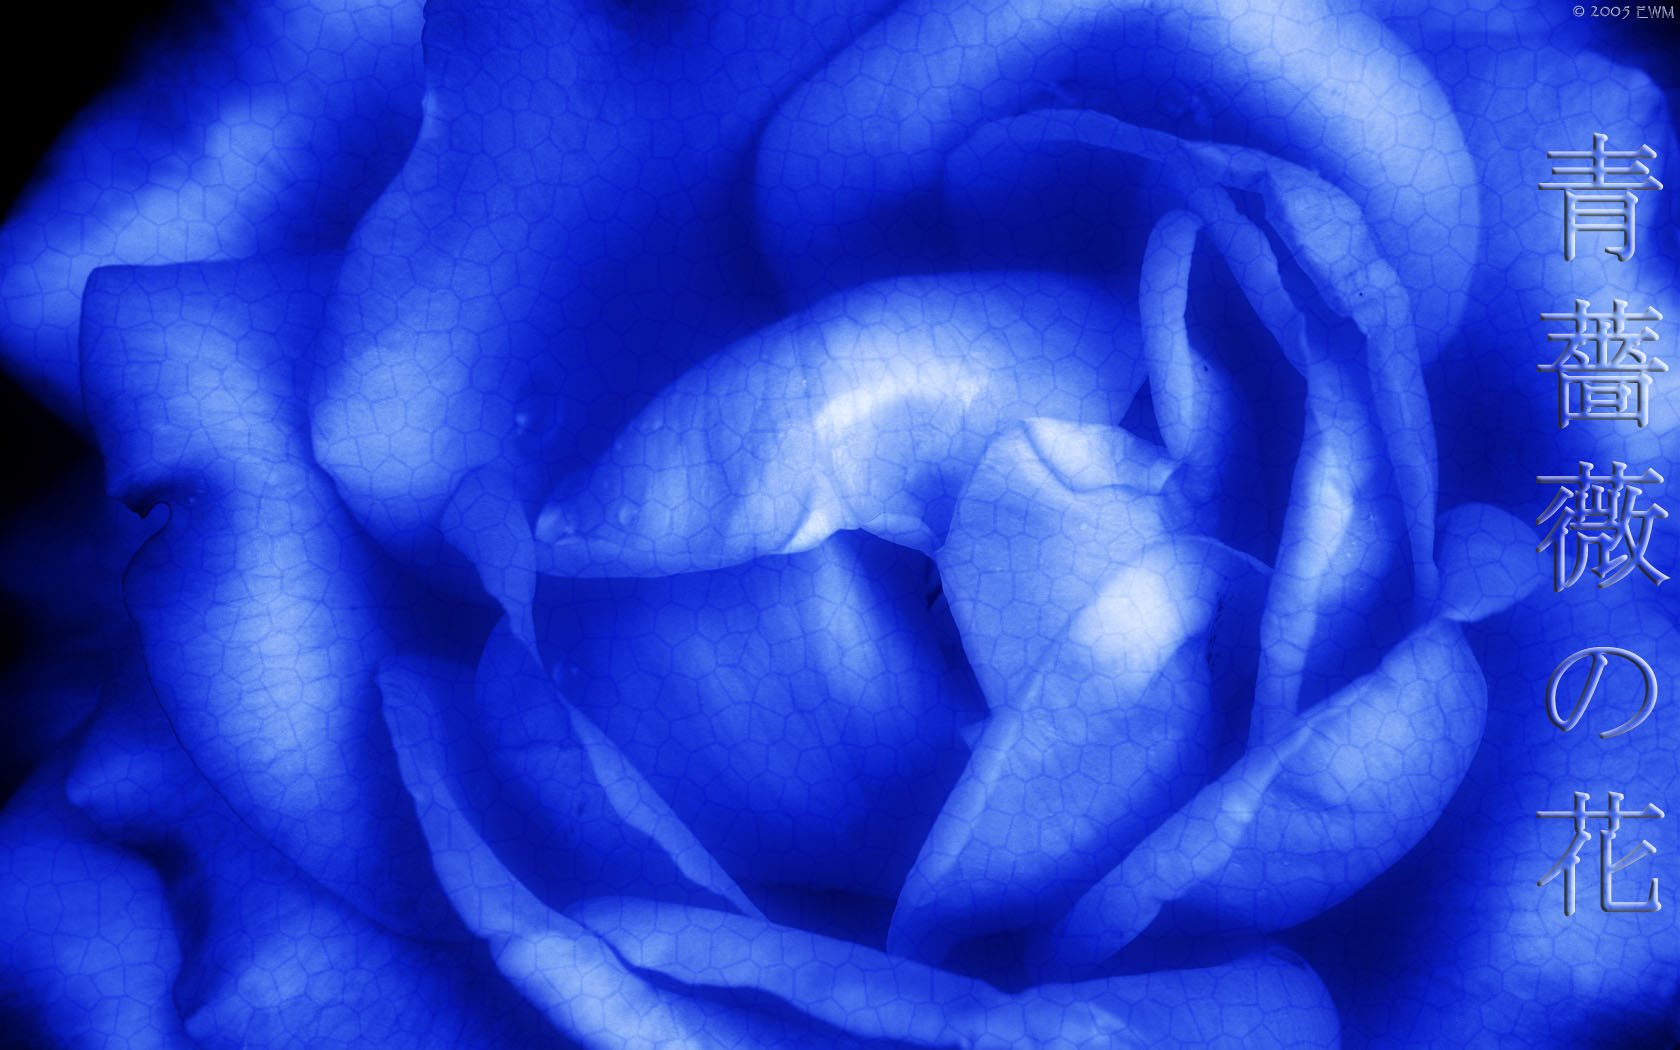 Free Download Blue Rose Wallpaper Wallpaper For Us 1680x1050 For Your Desktop Mobile Tablet Explore 50 Free Blue Roses Wallpaper Rose Pattern Wallpaper Rose Gold Wallpaper Blue Roses Wallpaper Images